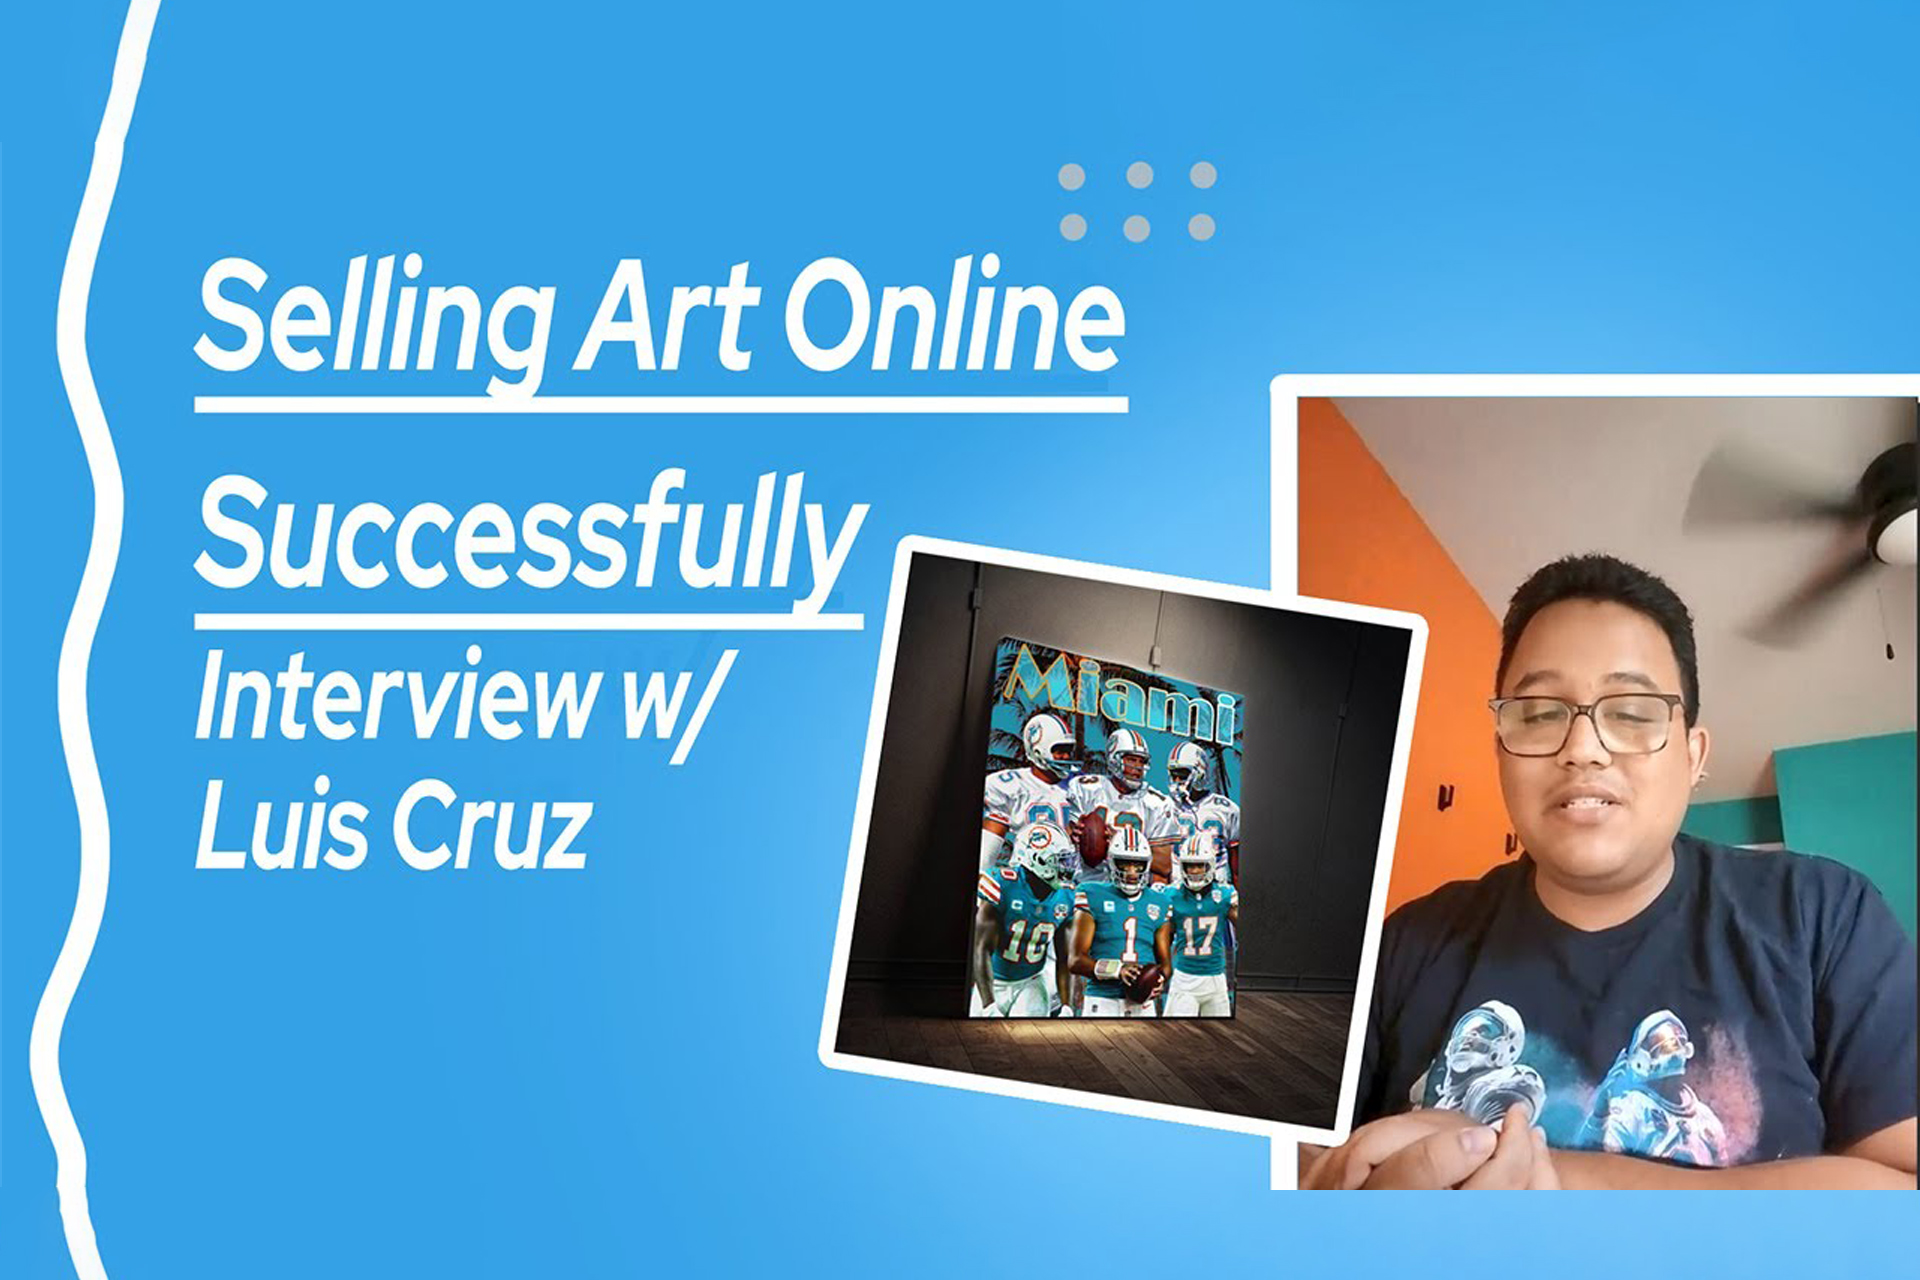 [WEBINAR] Dropshipping Art Prints with Luis Cruz